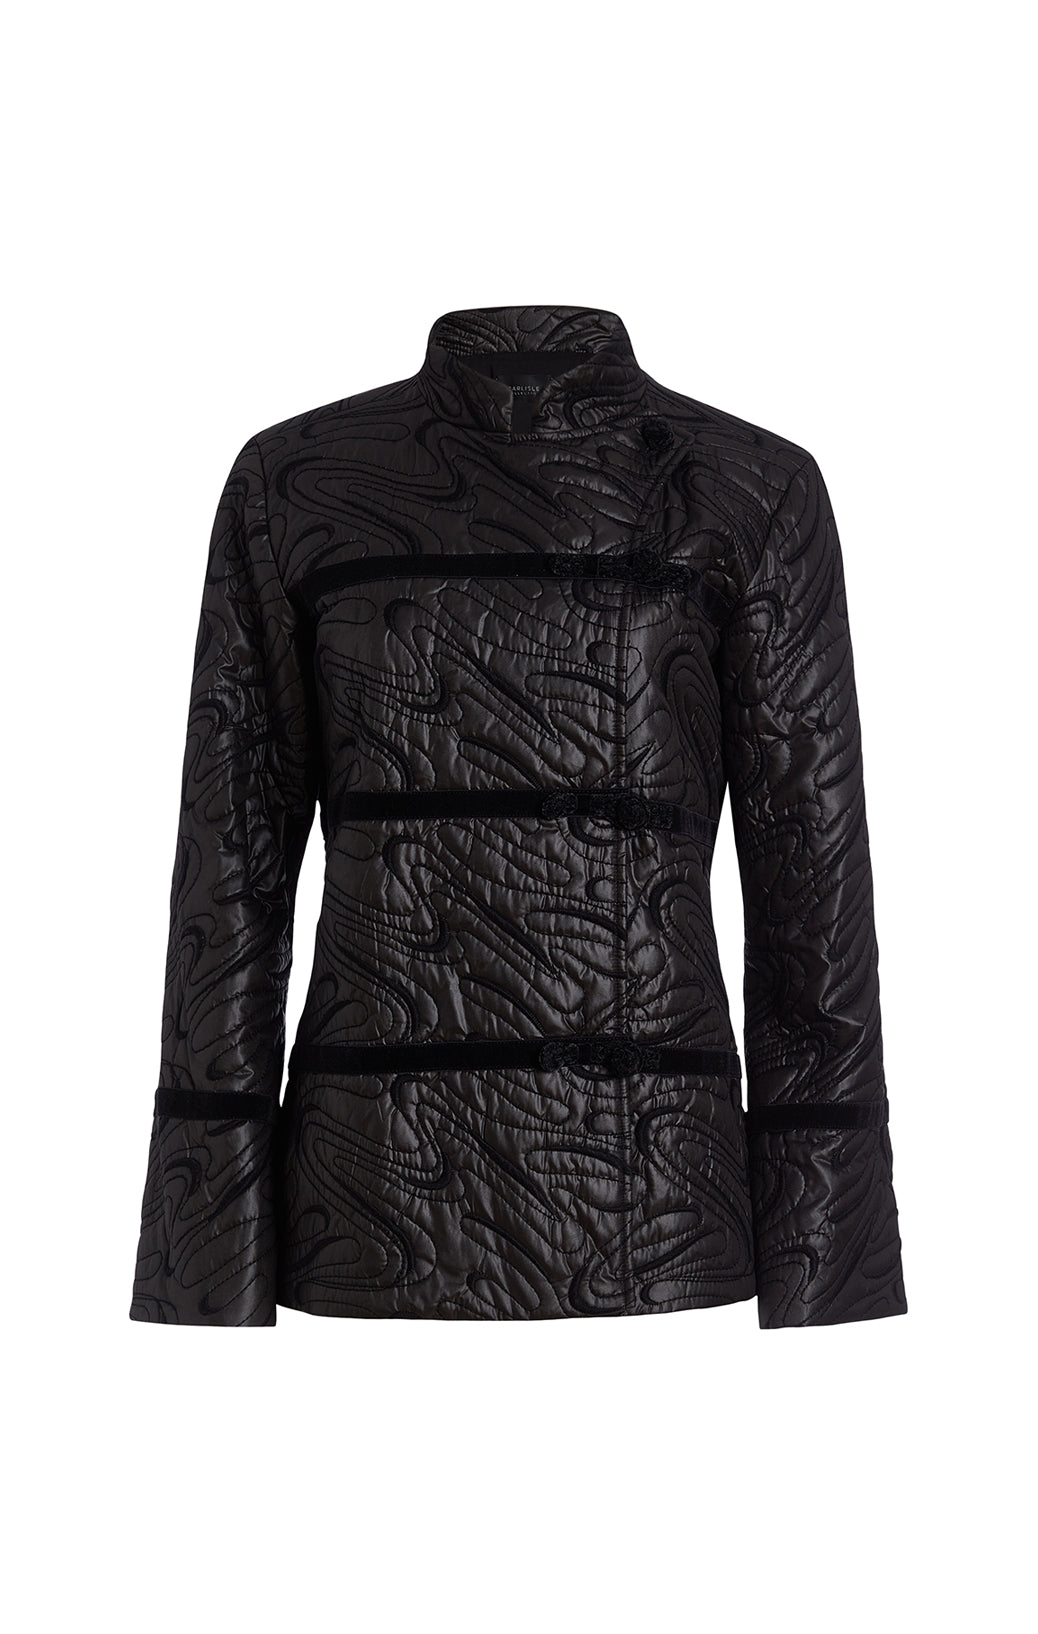 Fierce - Leather Trimmed Animal Jacquard Jacket -  Product Image